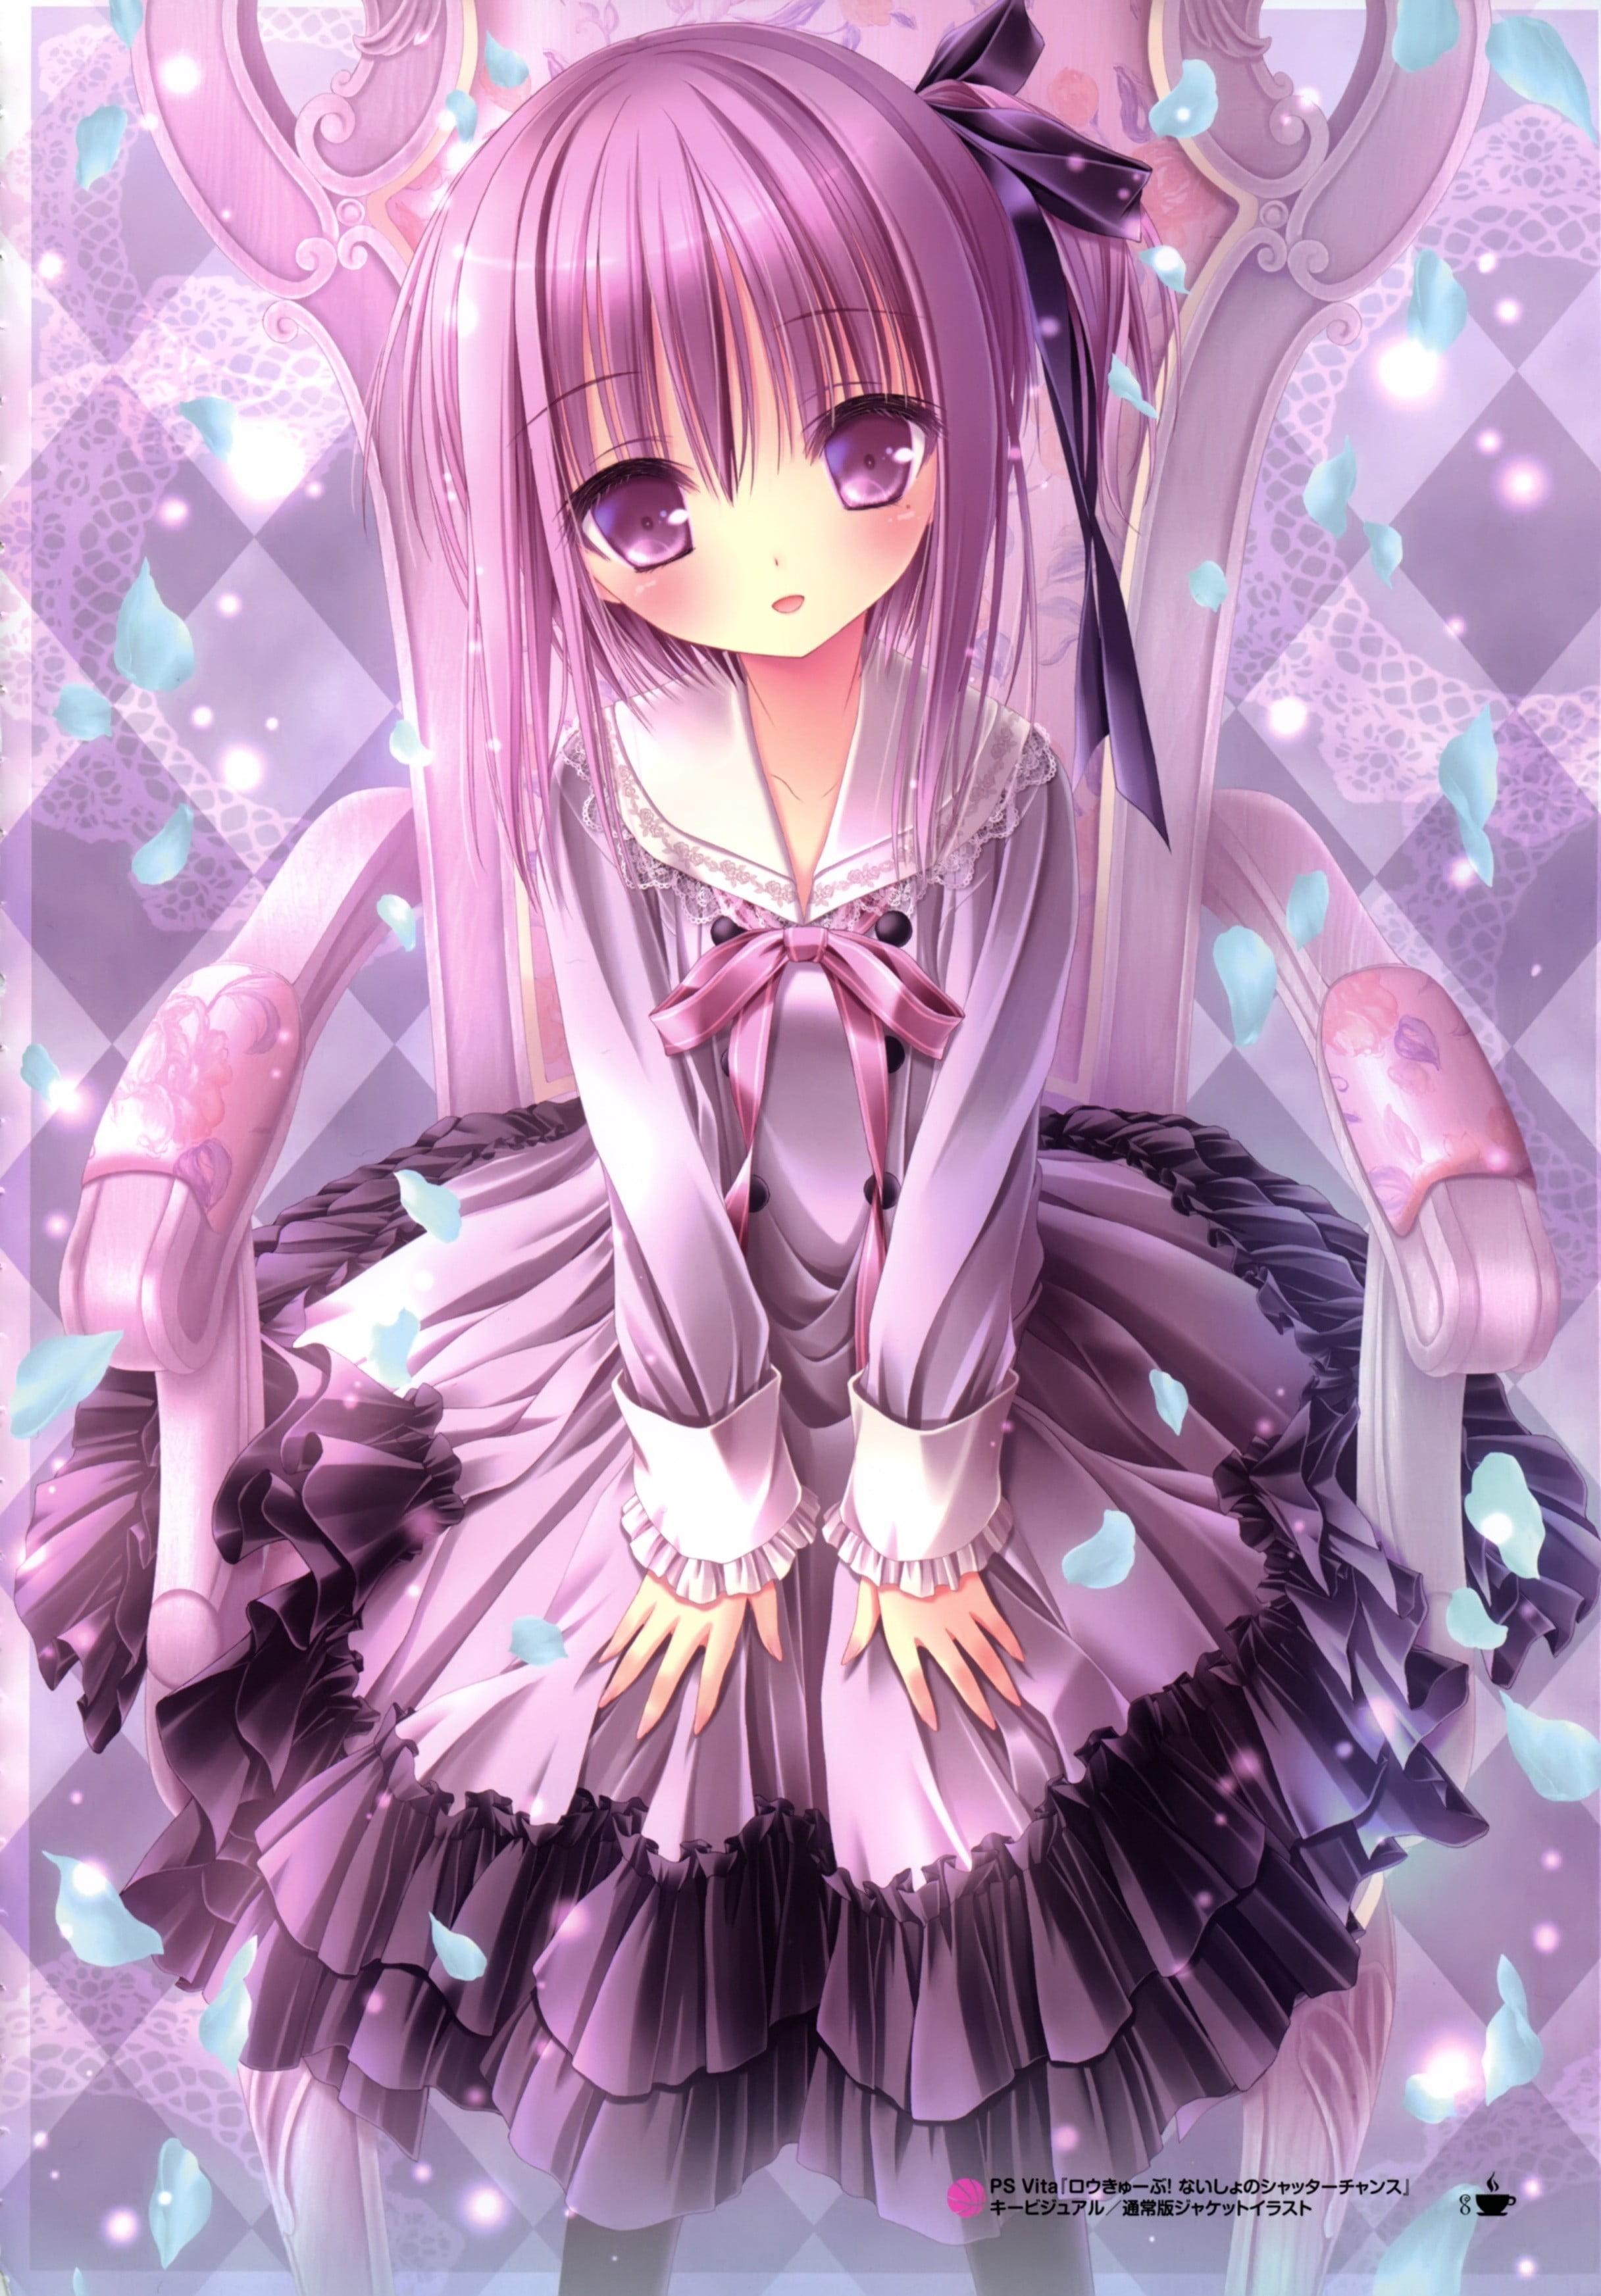 Female anime in purple dress illustration HD wallpaper. Wallpaper